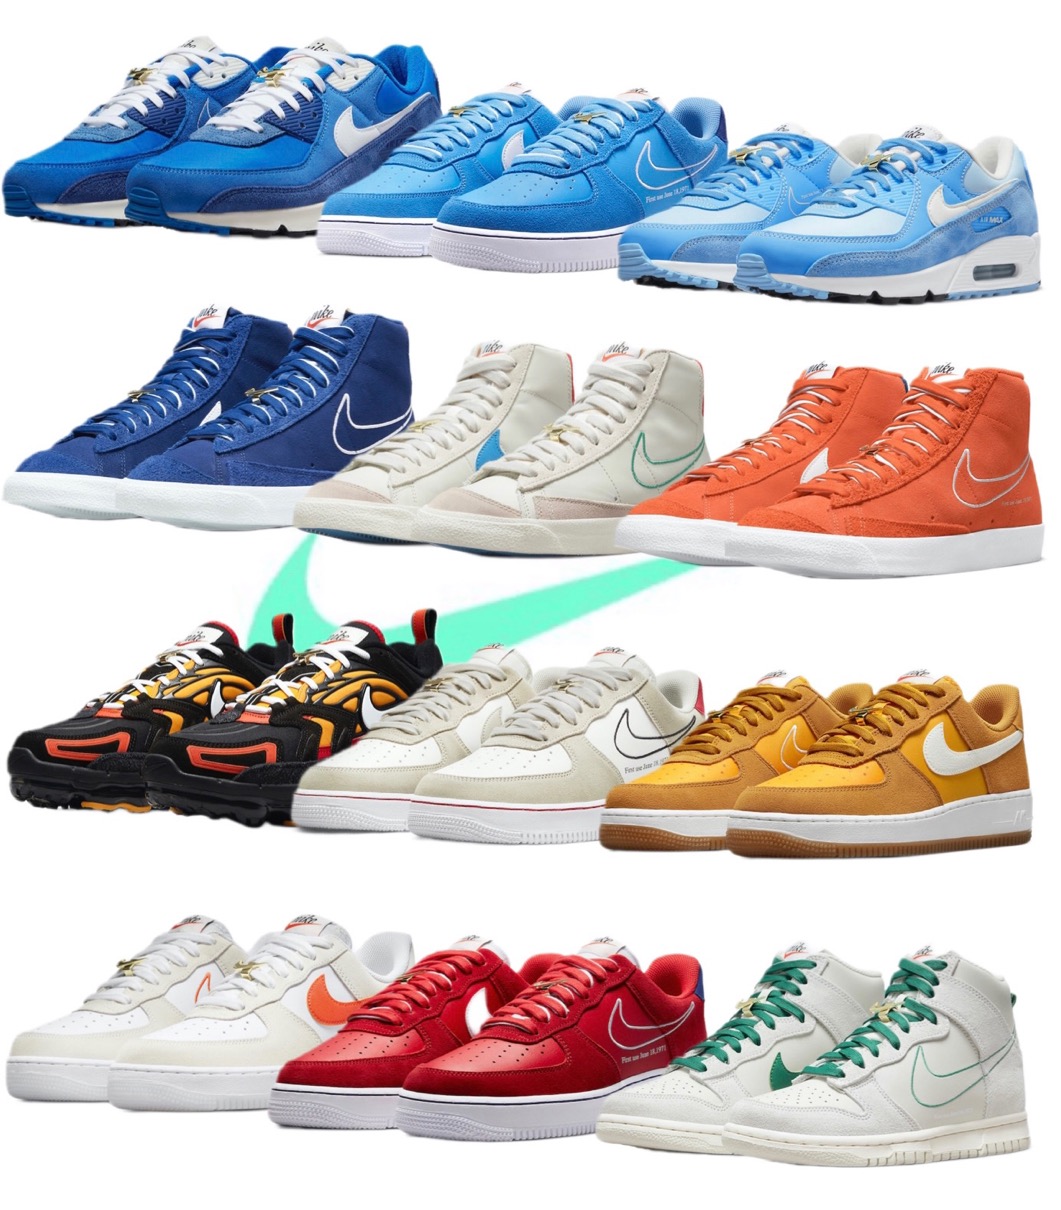 Nike】スウッシュロゴ生誕50周年を記念した“First Use” Collectionが国内6月16日/7月1日に発売予定 | UP TO DATE